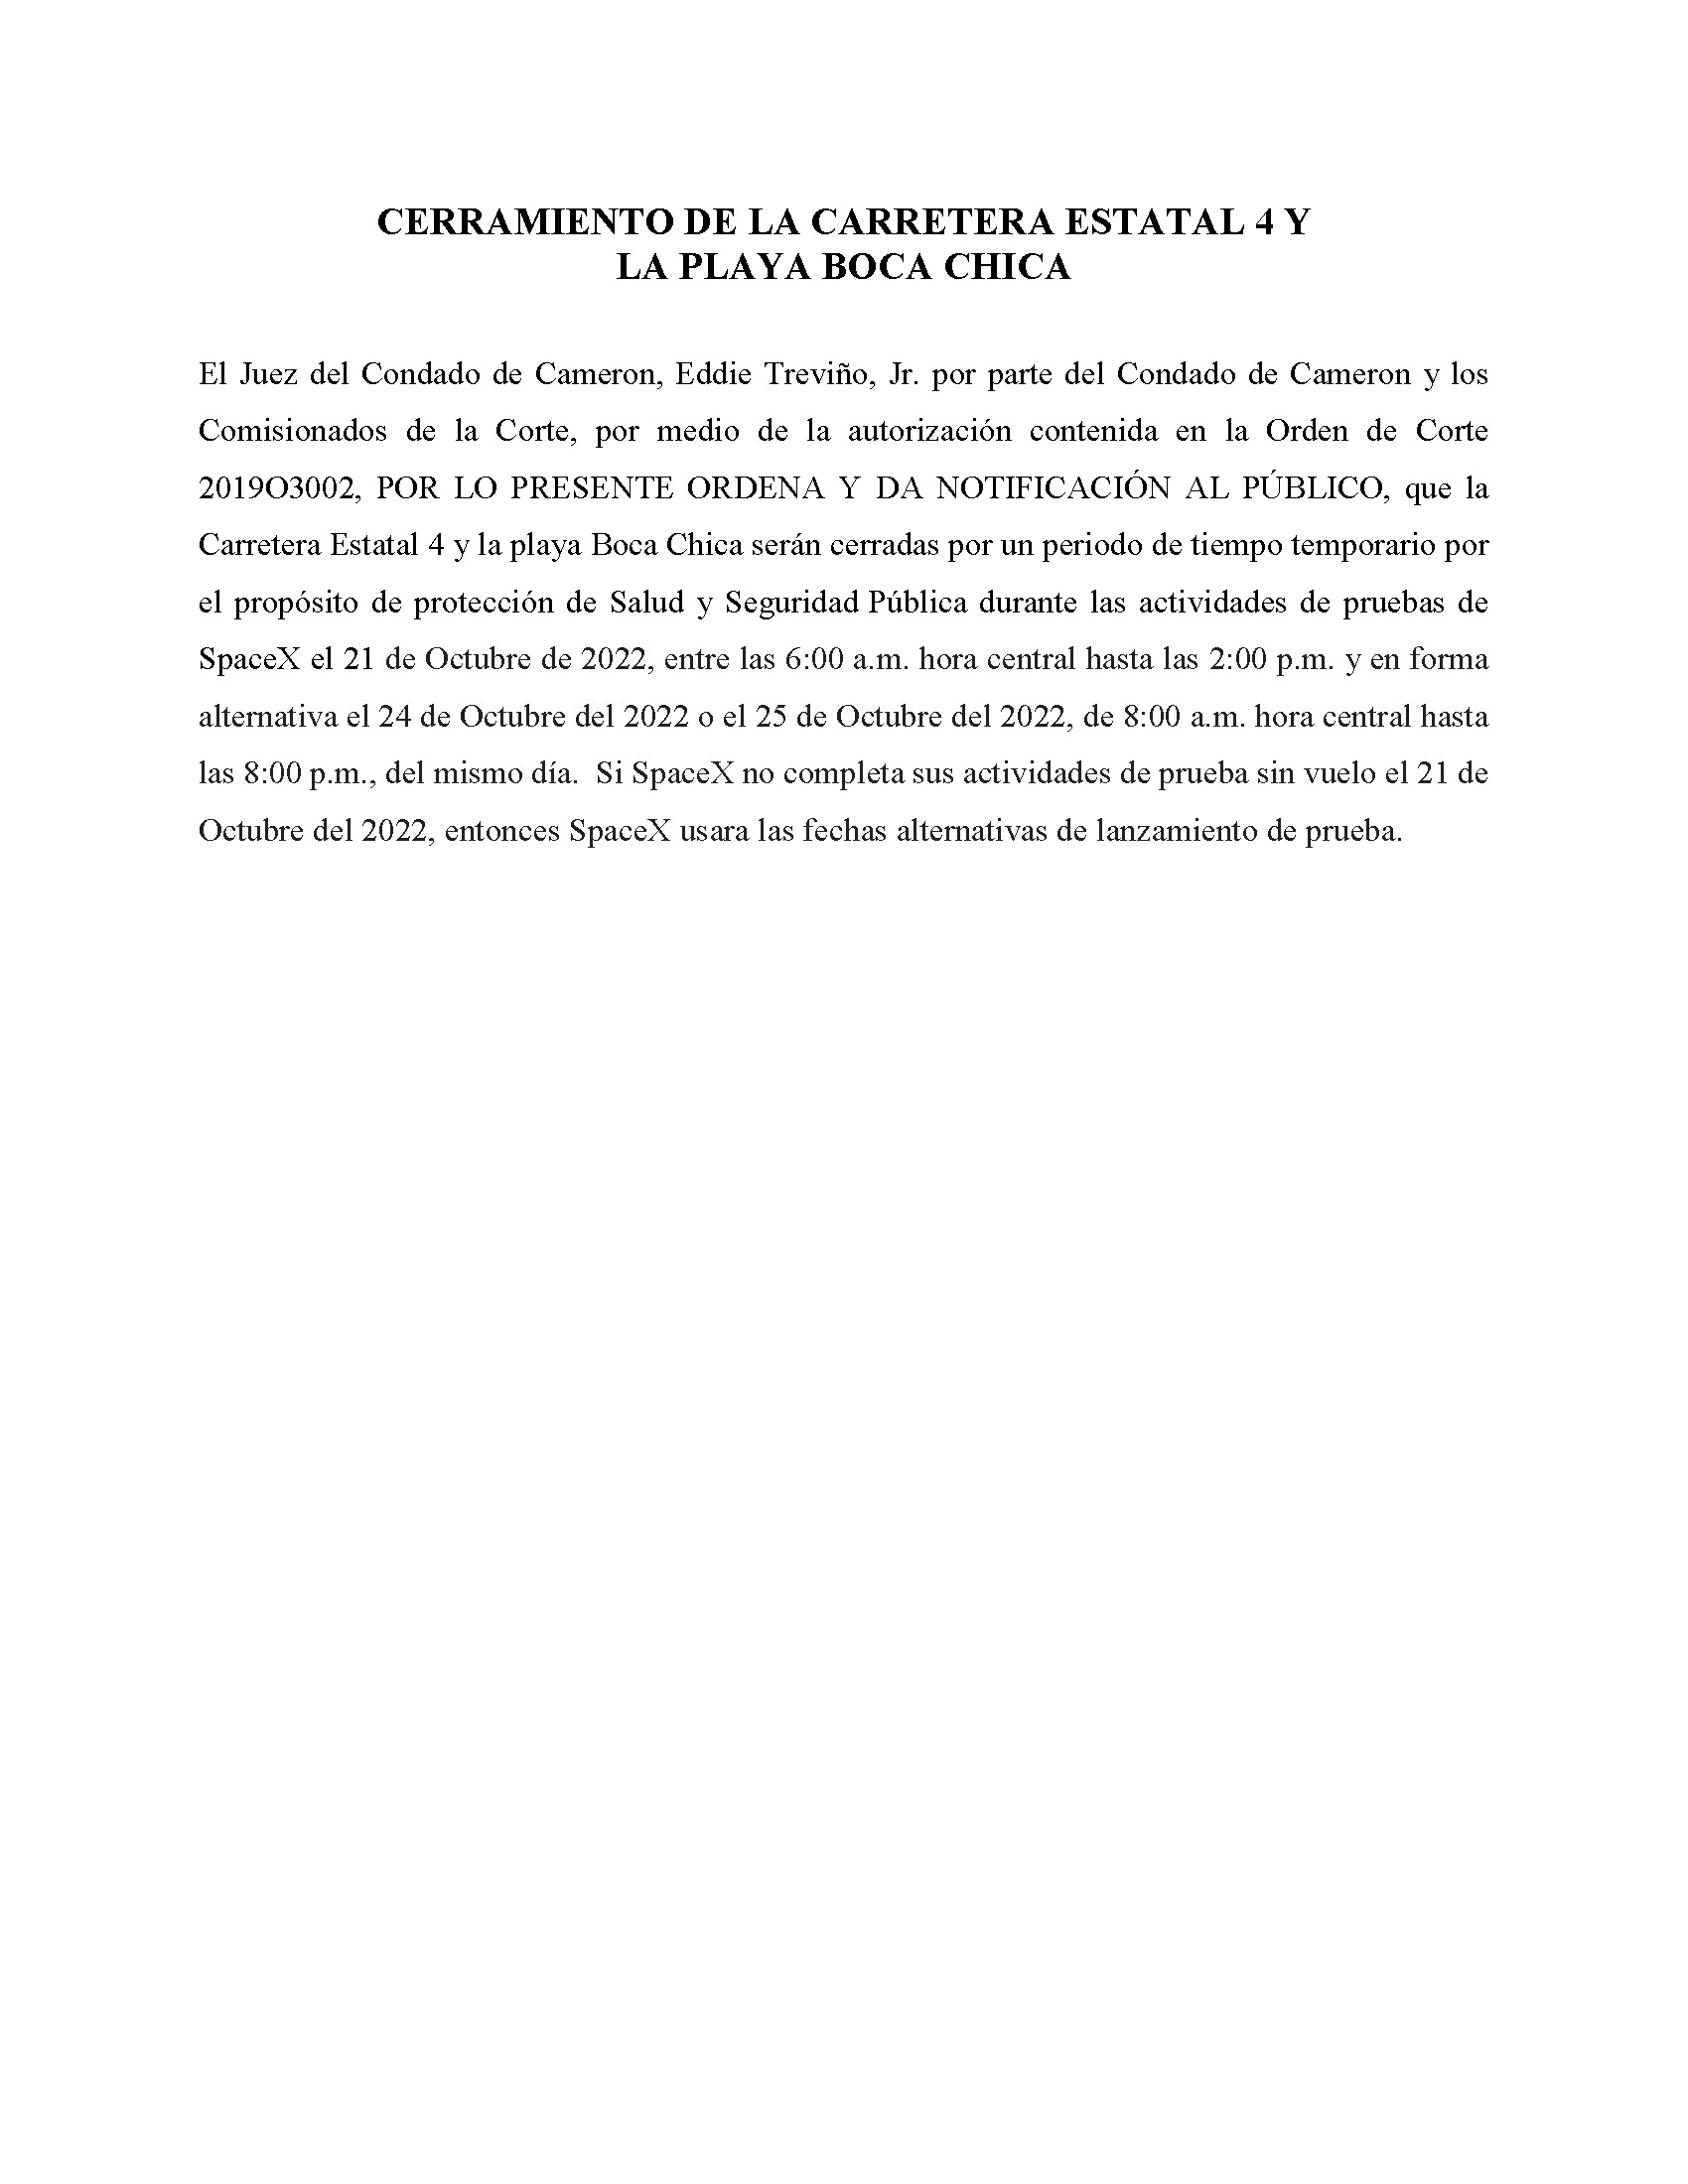 ORDER.CLOSURE OF HIGHWAY 4 Y LA PLAYA BOCA CHICA.SPANISH.10.21.2022